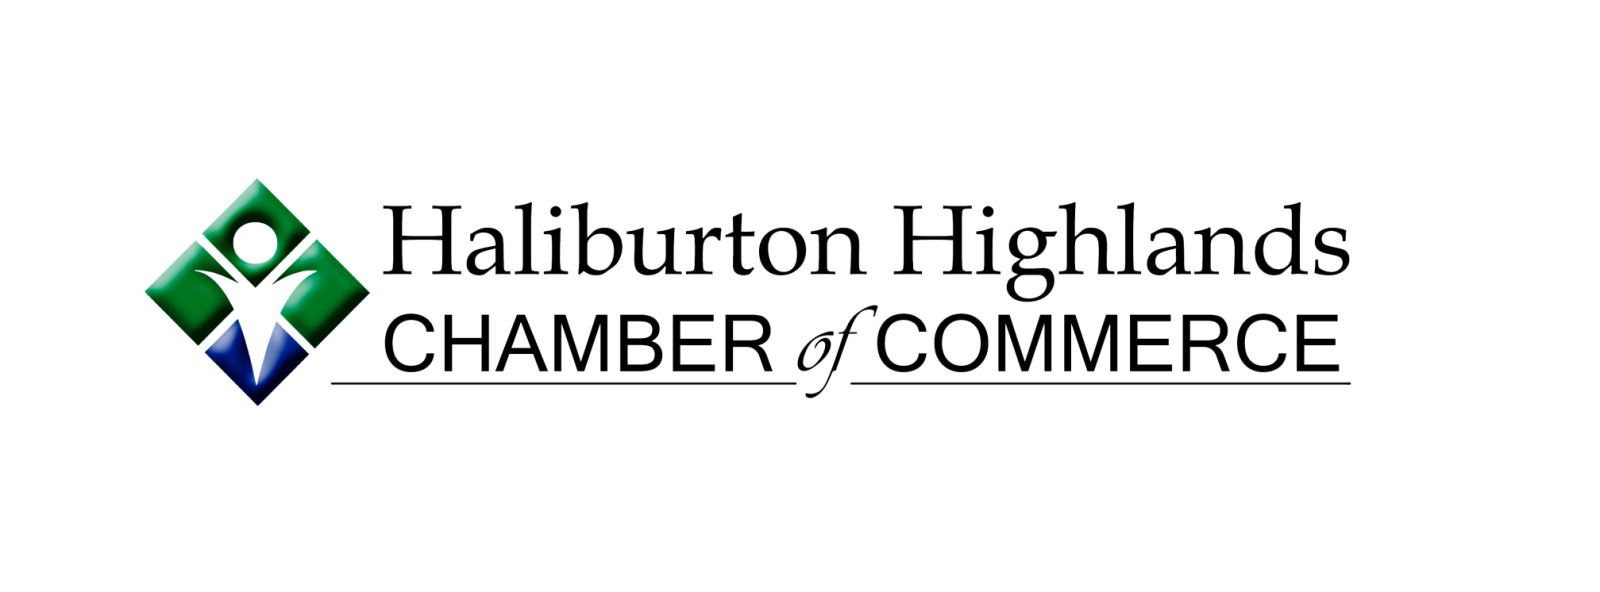 Haliburton Highlands Chamber of Commerce